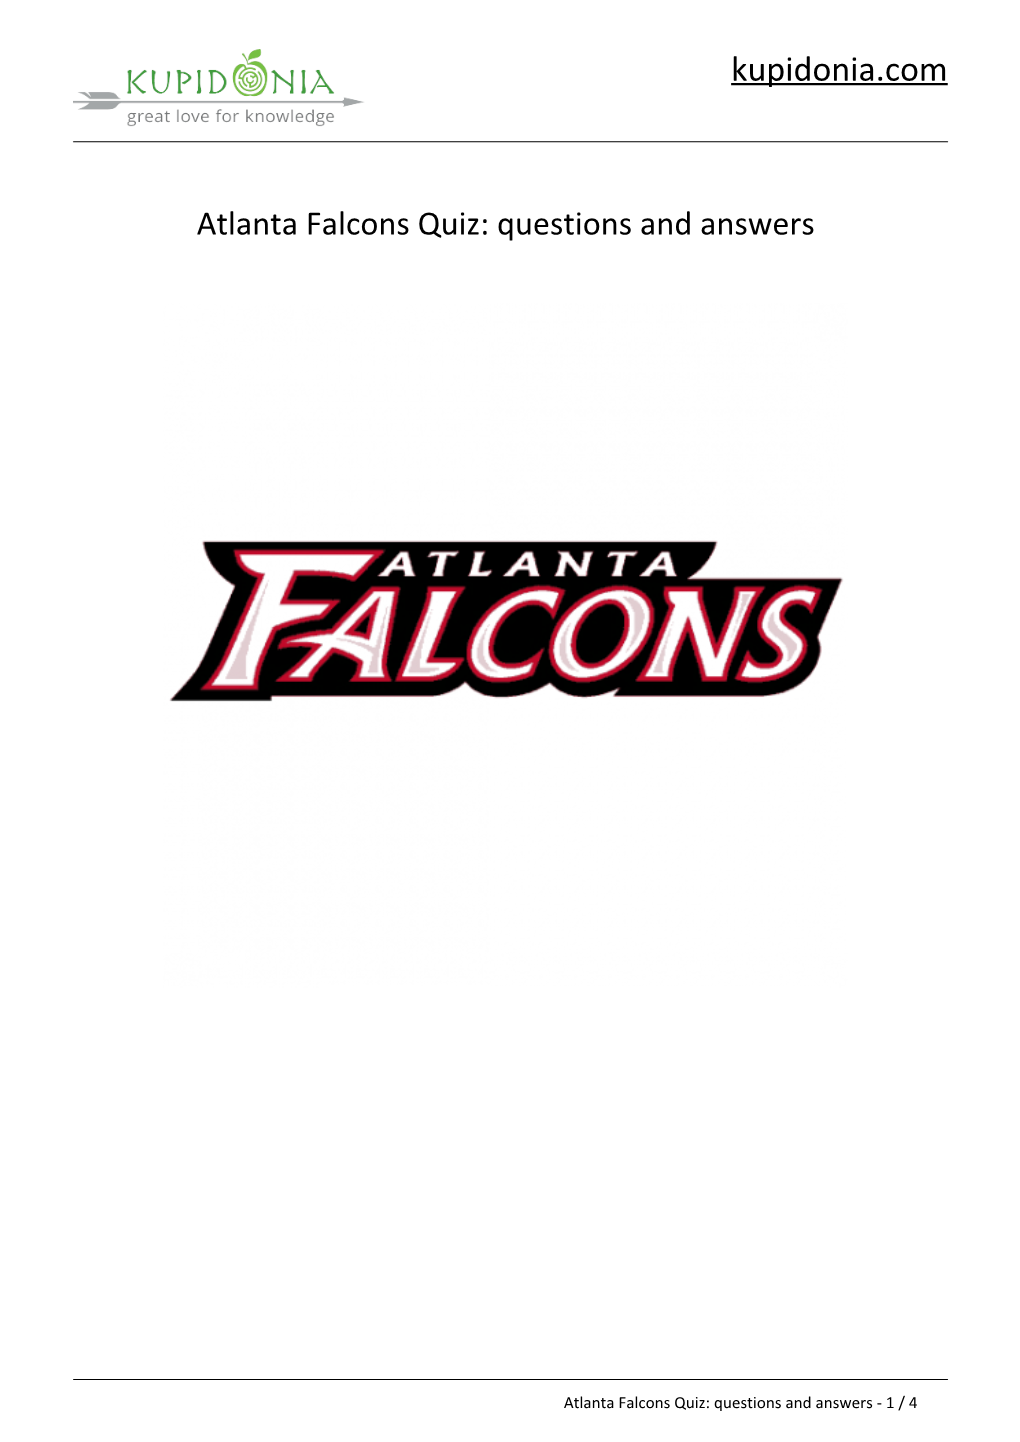 Atlanta Falcons Quiz: Questions and Answers